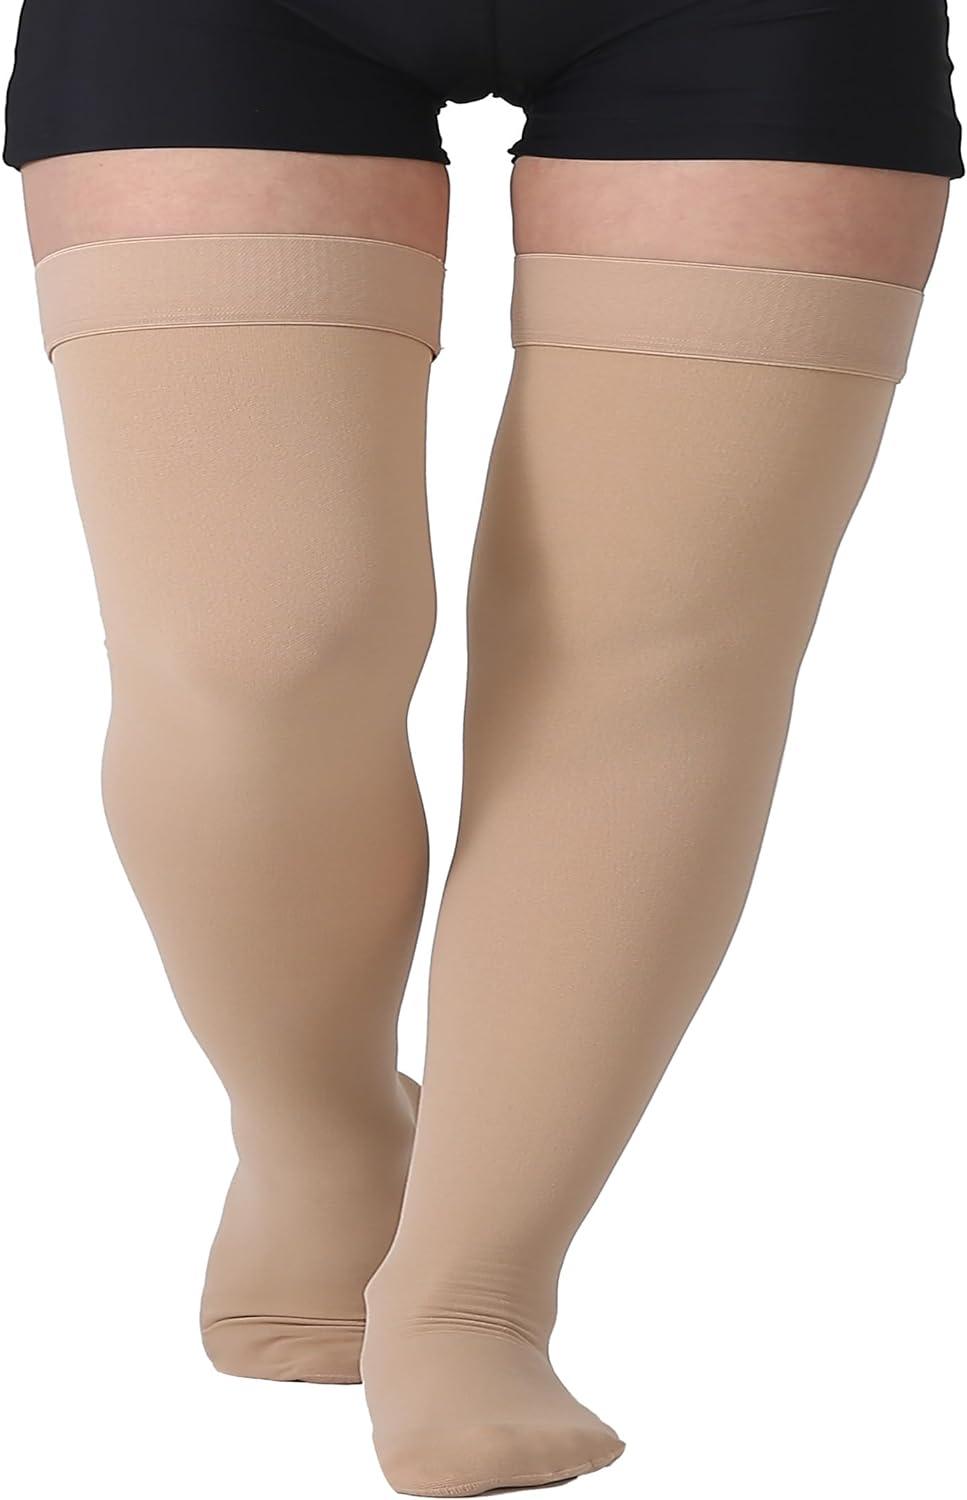 Compression Socks Men Women Flight Travel Stockings Varicose Veins Leg  Support